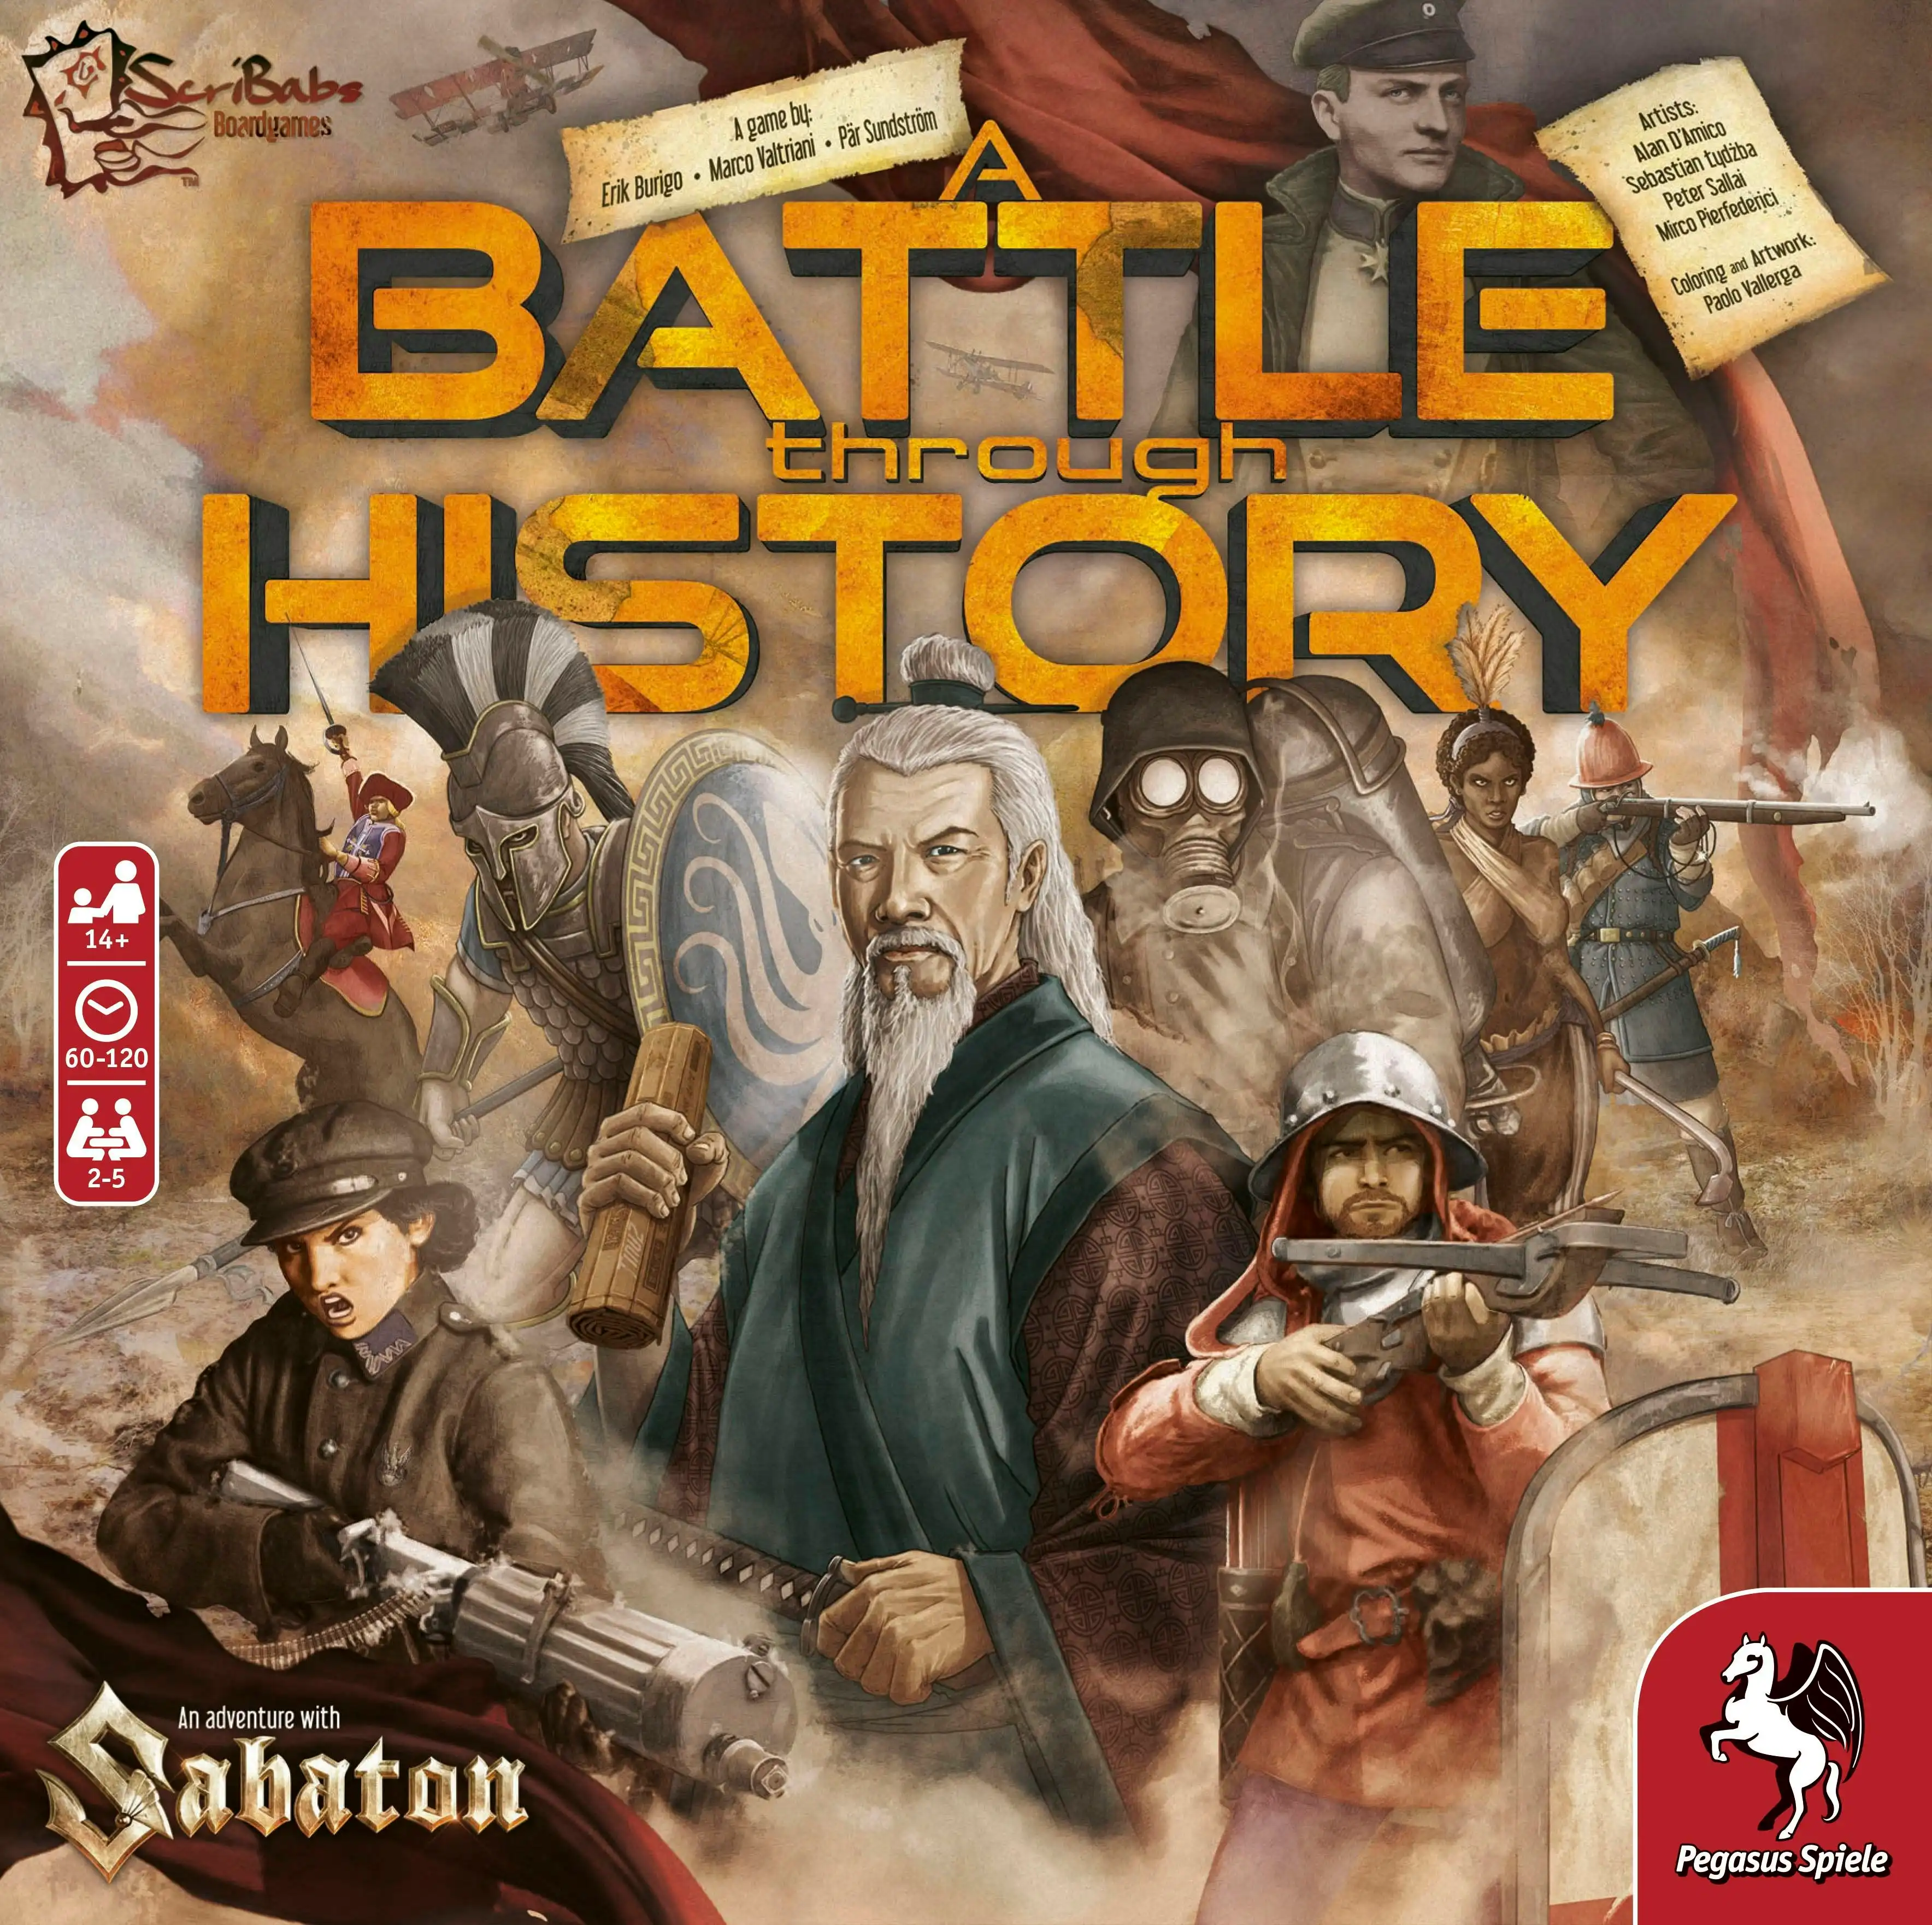 A Battle Through History – An Adventure with Sabaton